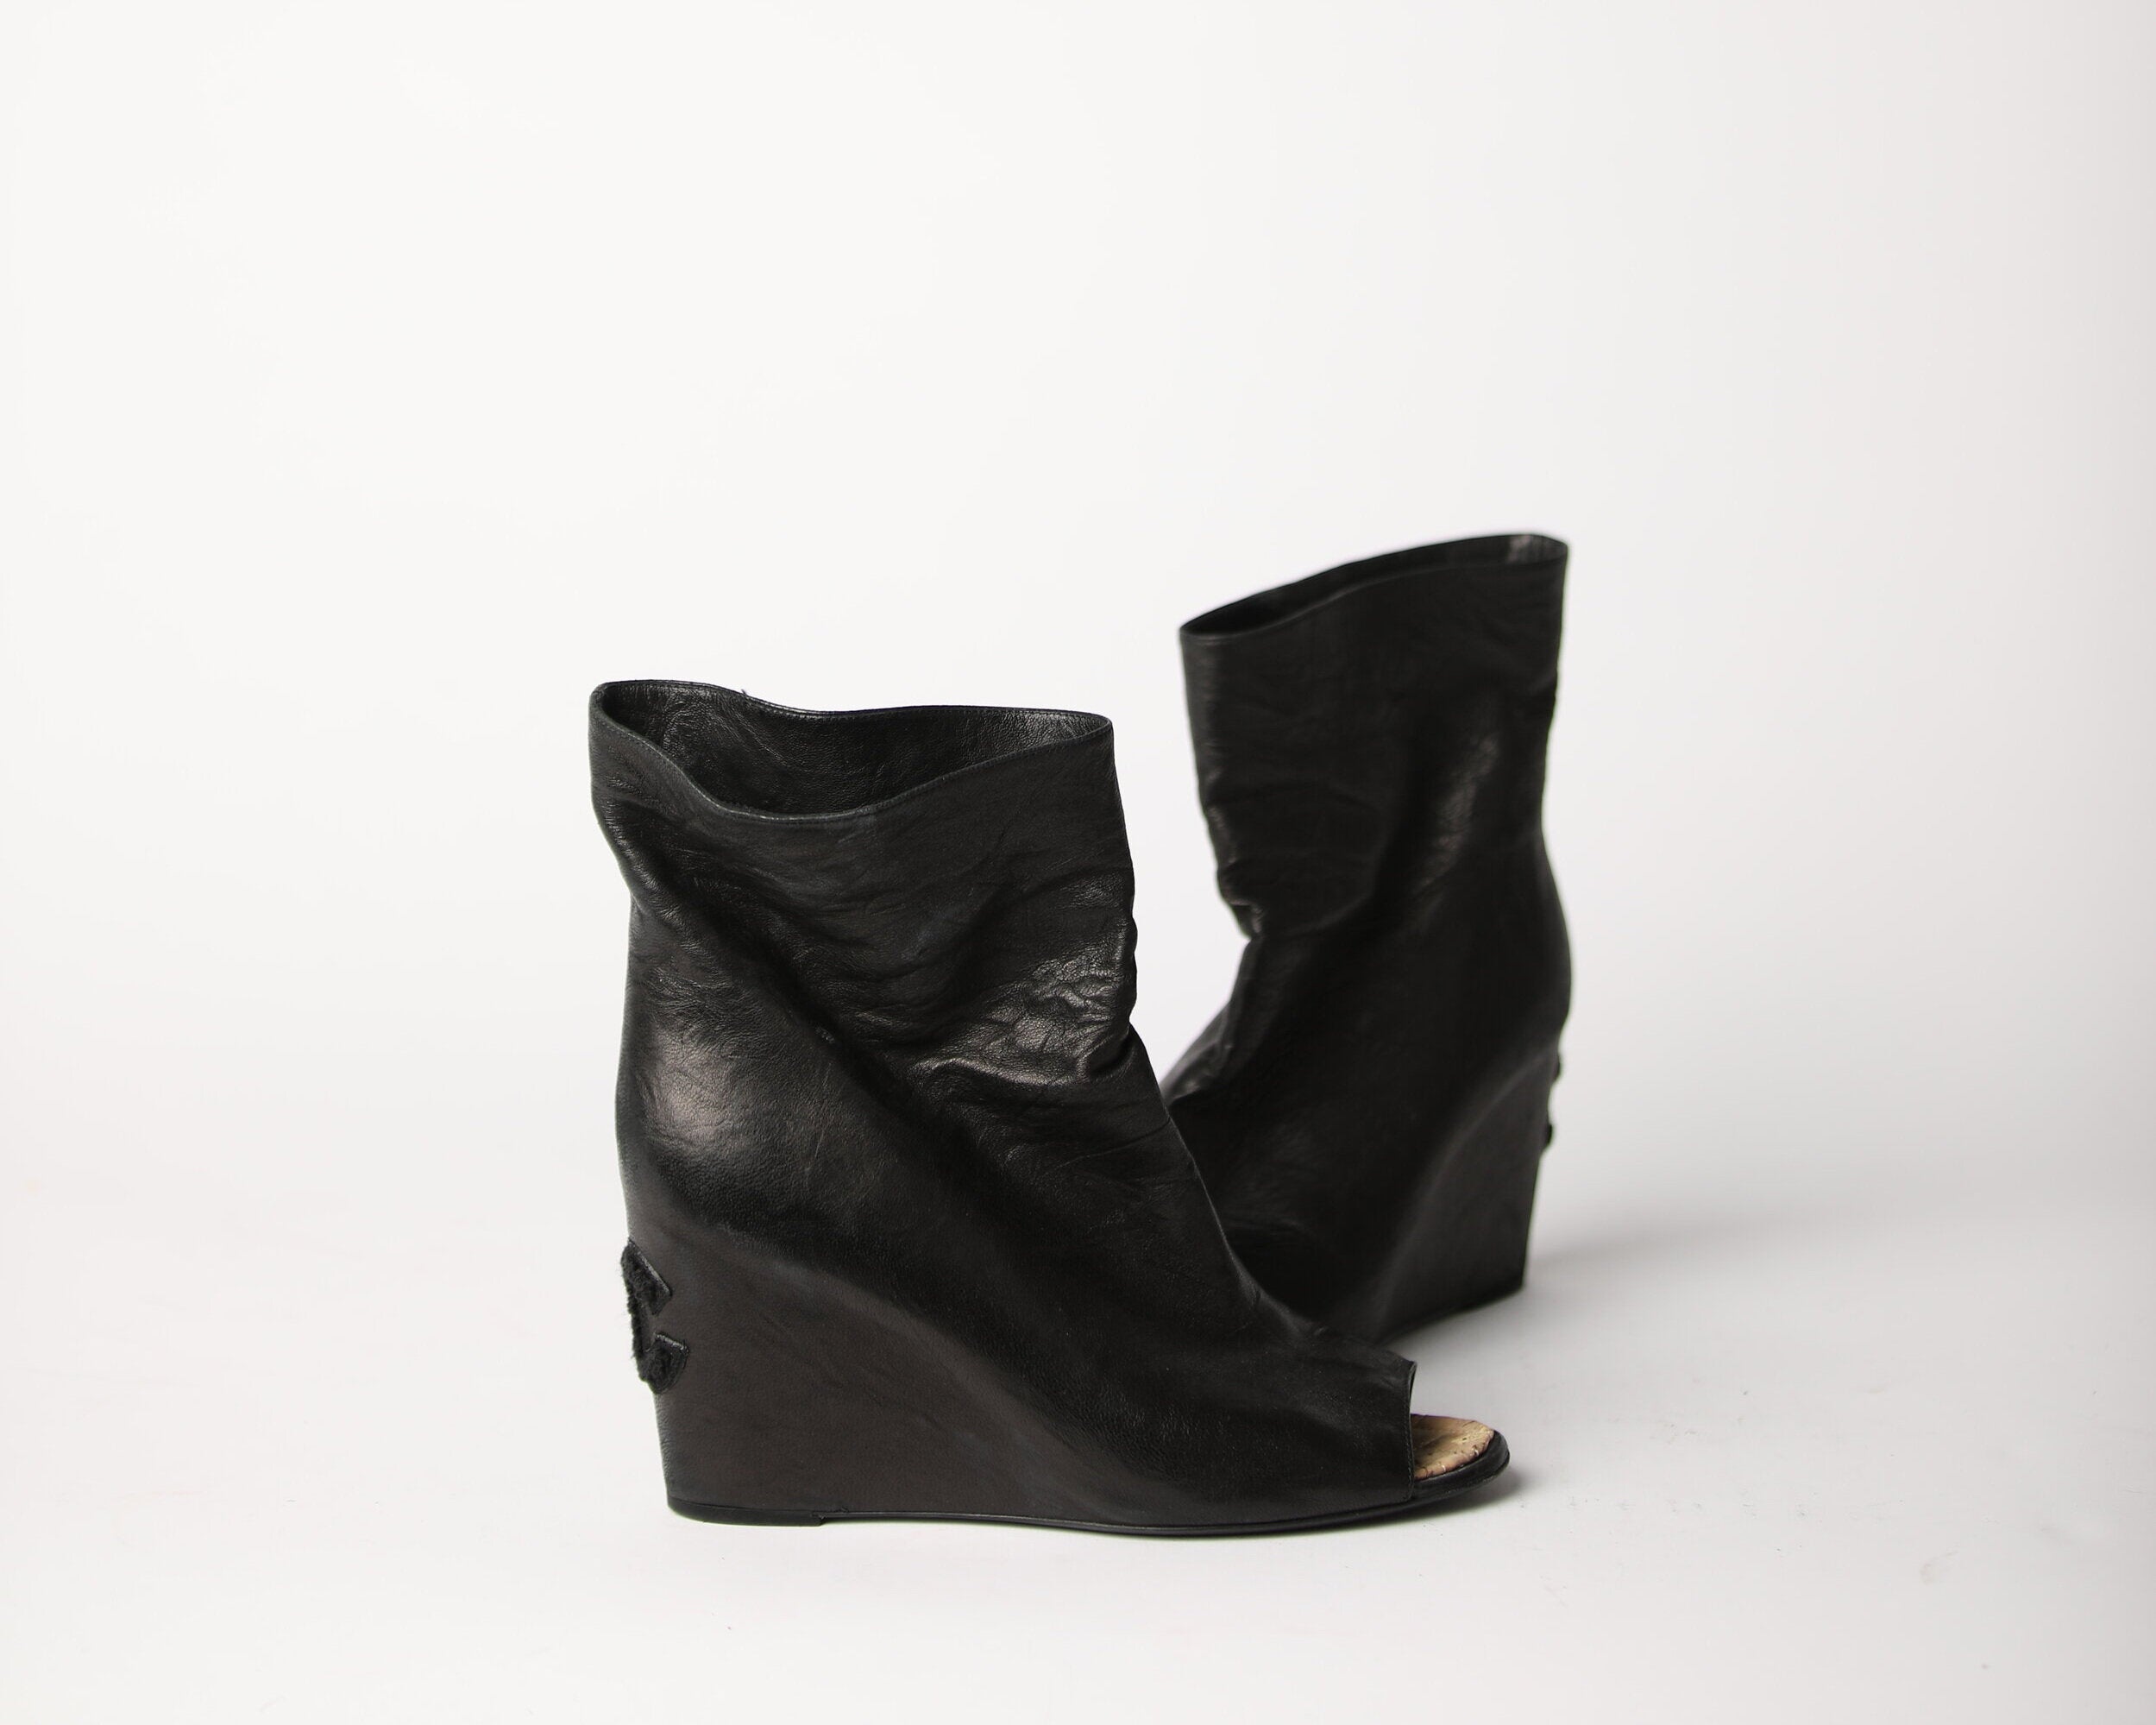 Chanel Boots Black Wedge Sole 36.5 Box Size Women US6.5 box